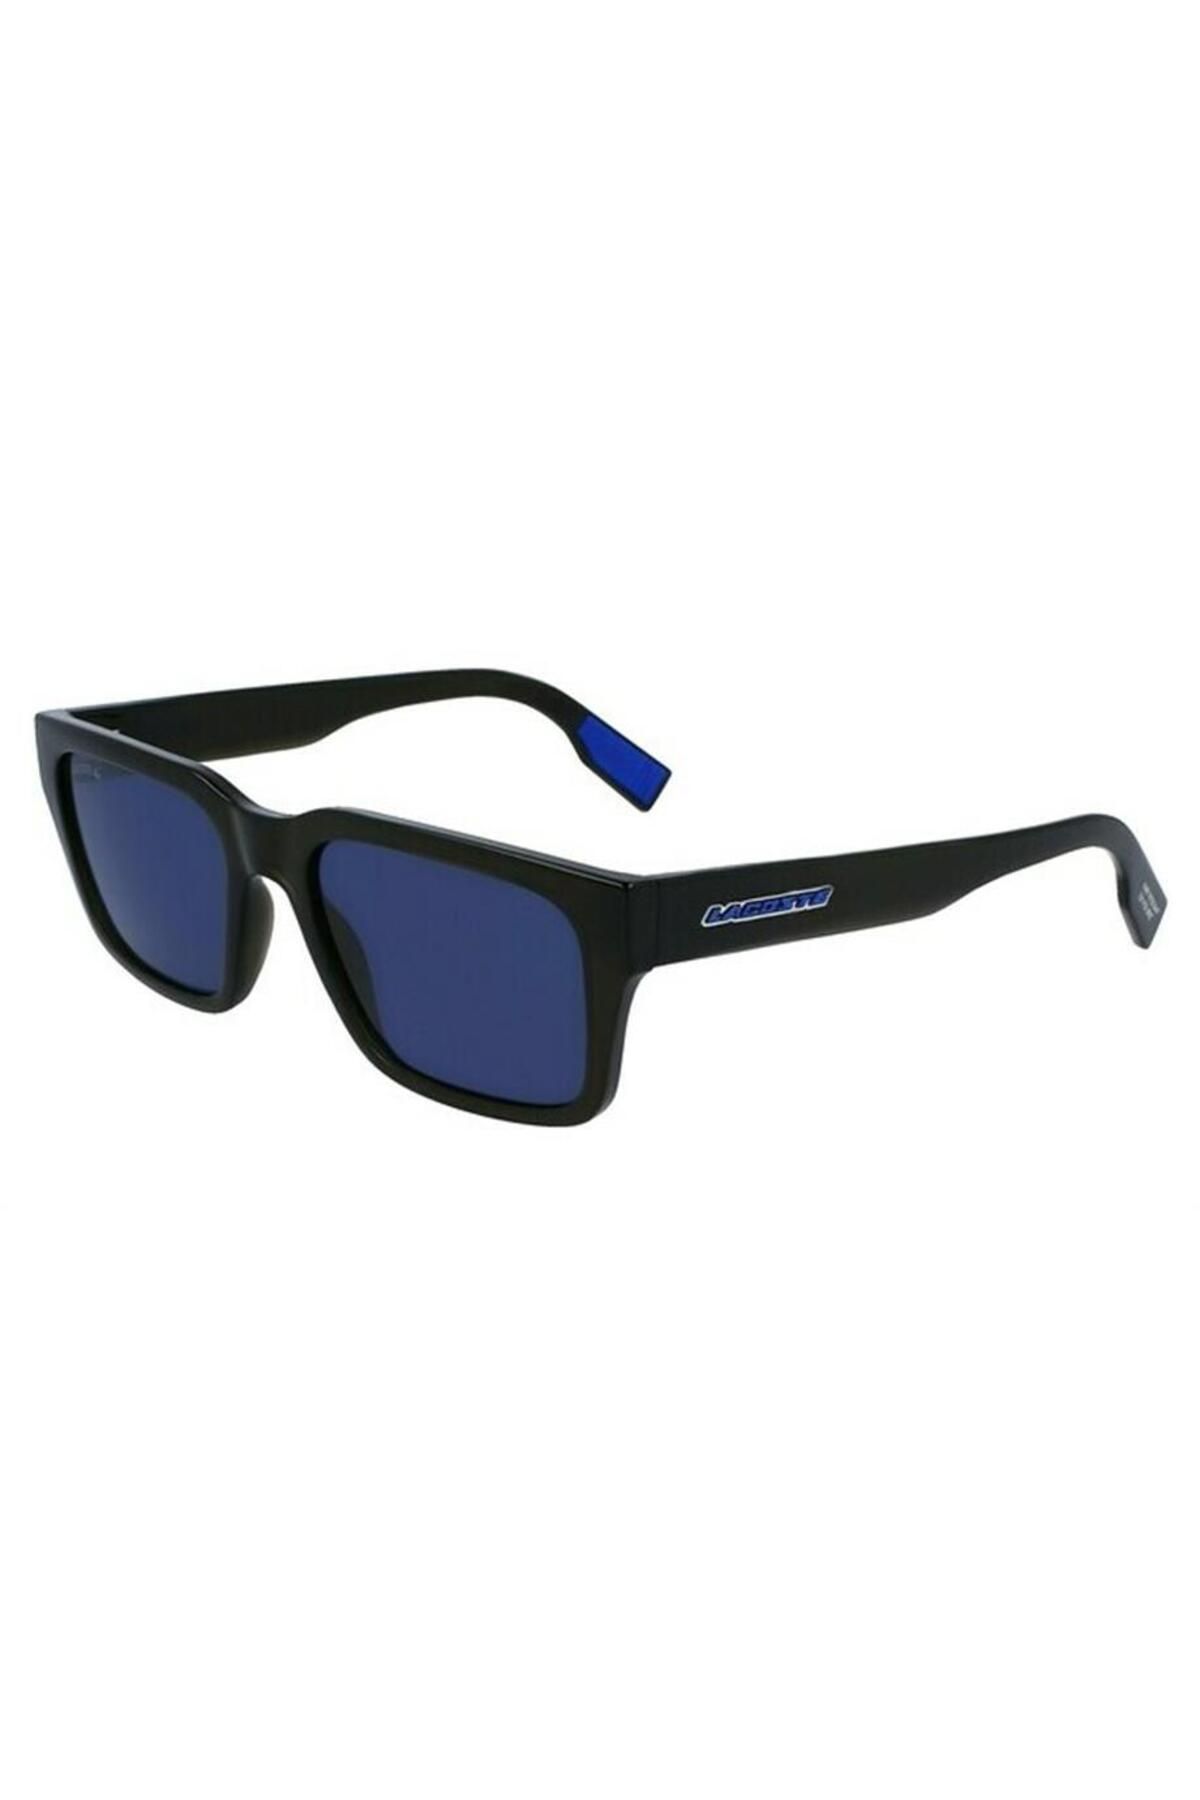 Lacoste L979S 230 Sunglasses - US